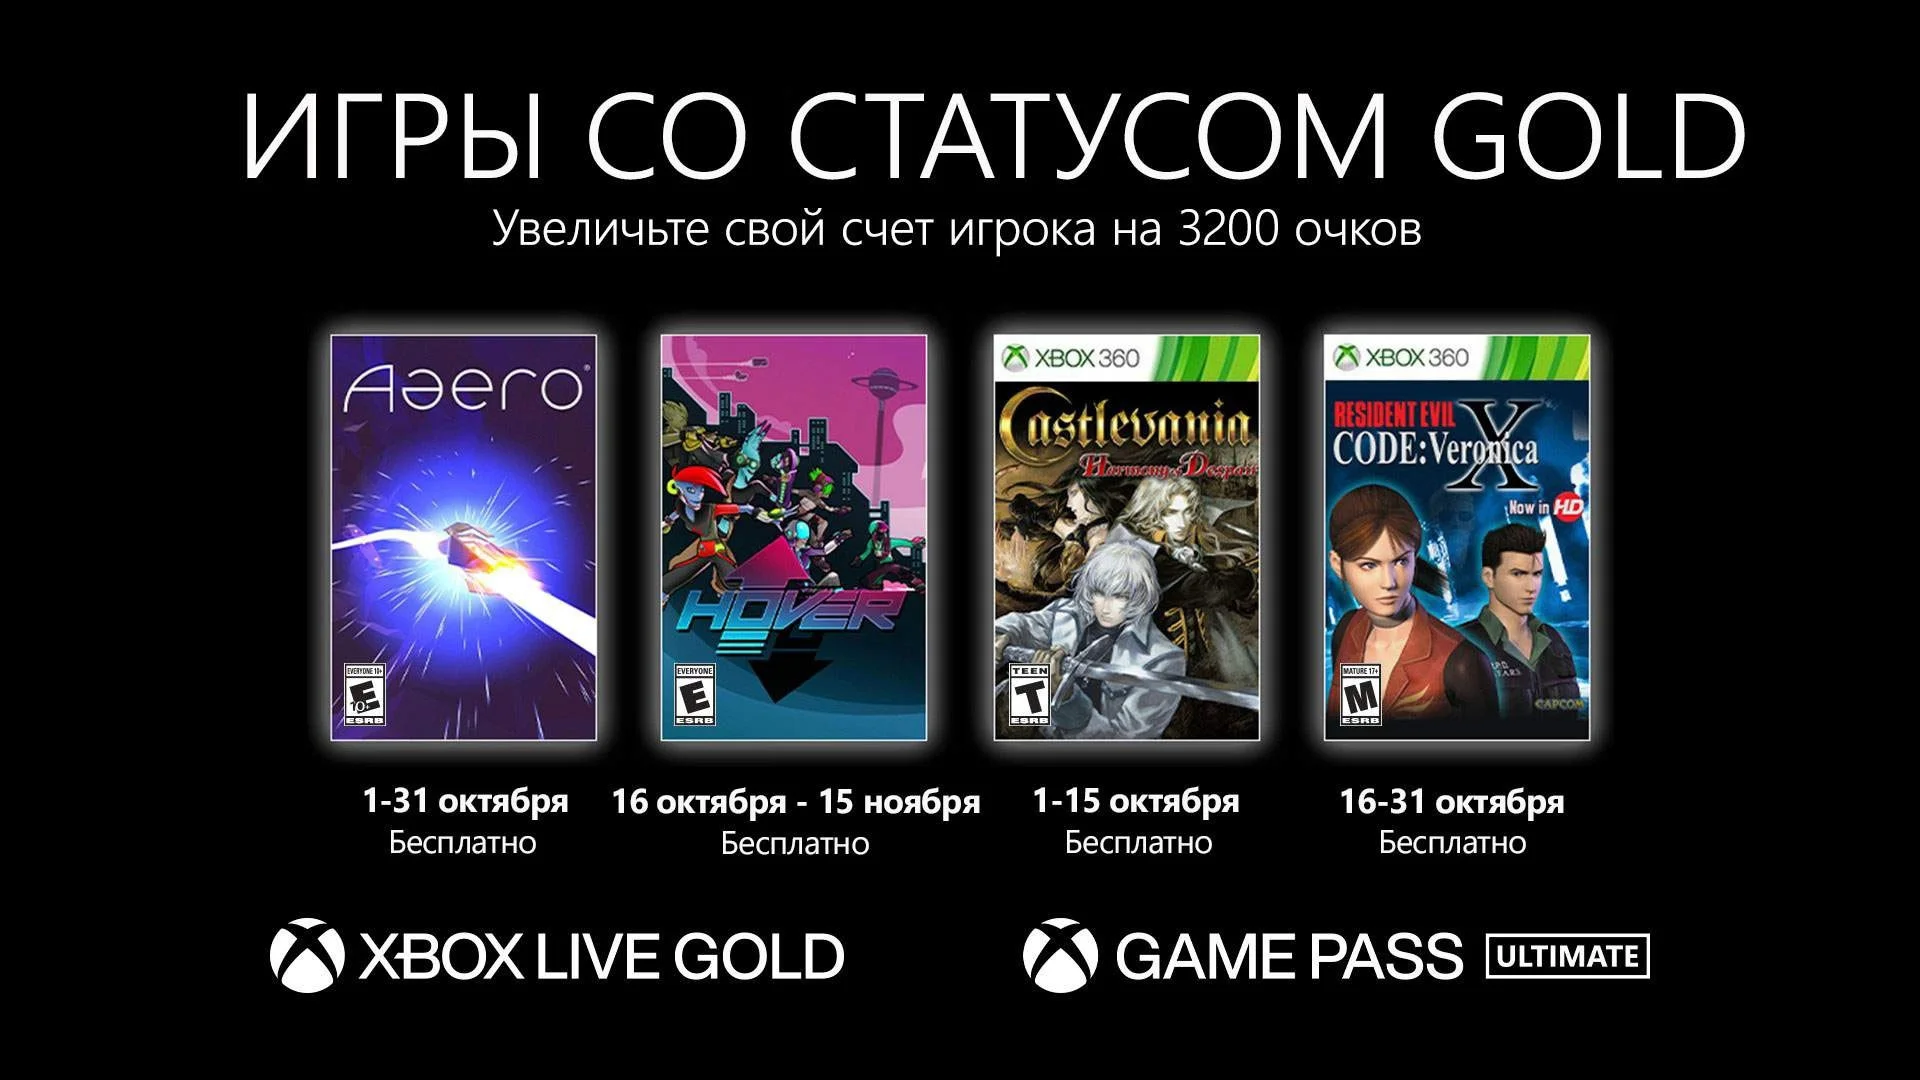 Resident Evil Code: Veronica X и Castlevania в октябре для Xbox Live Gold - фото 1